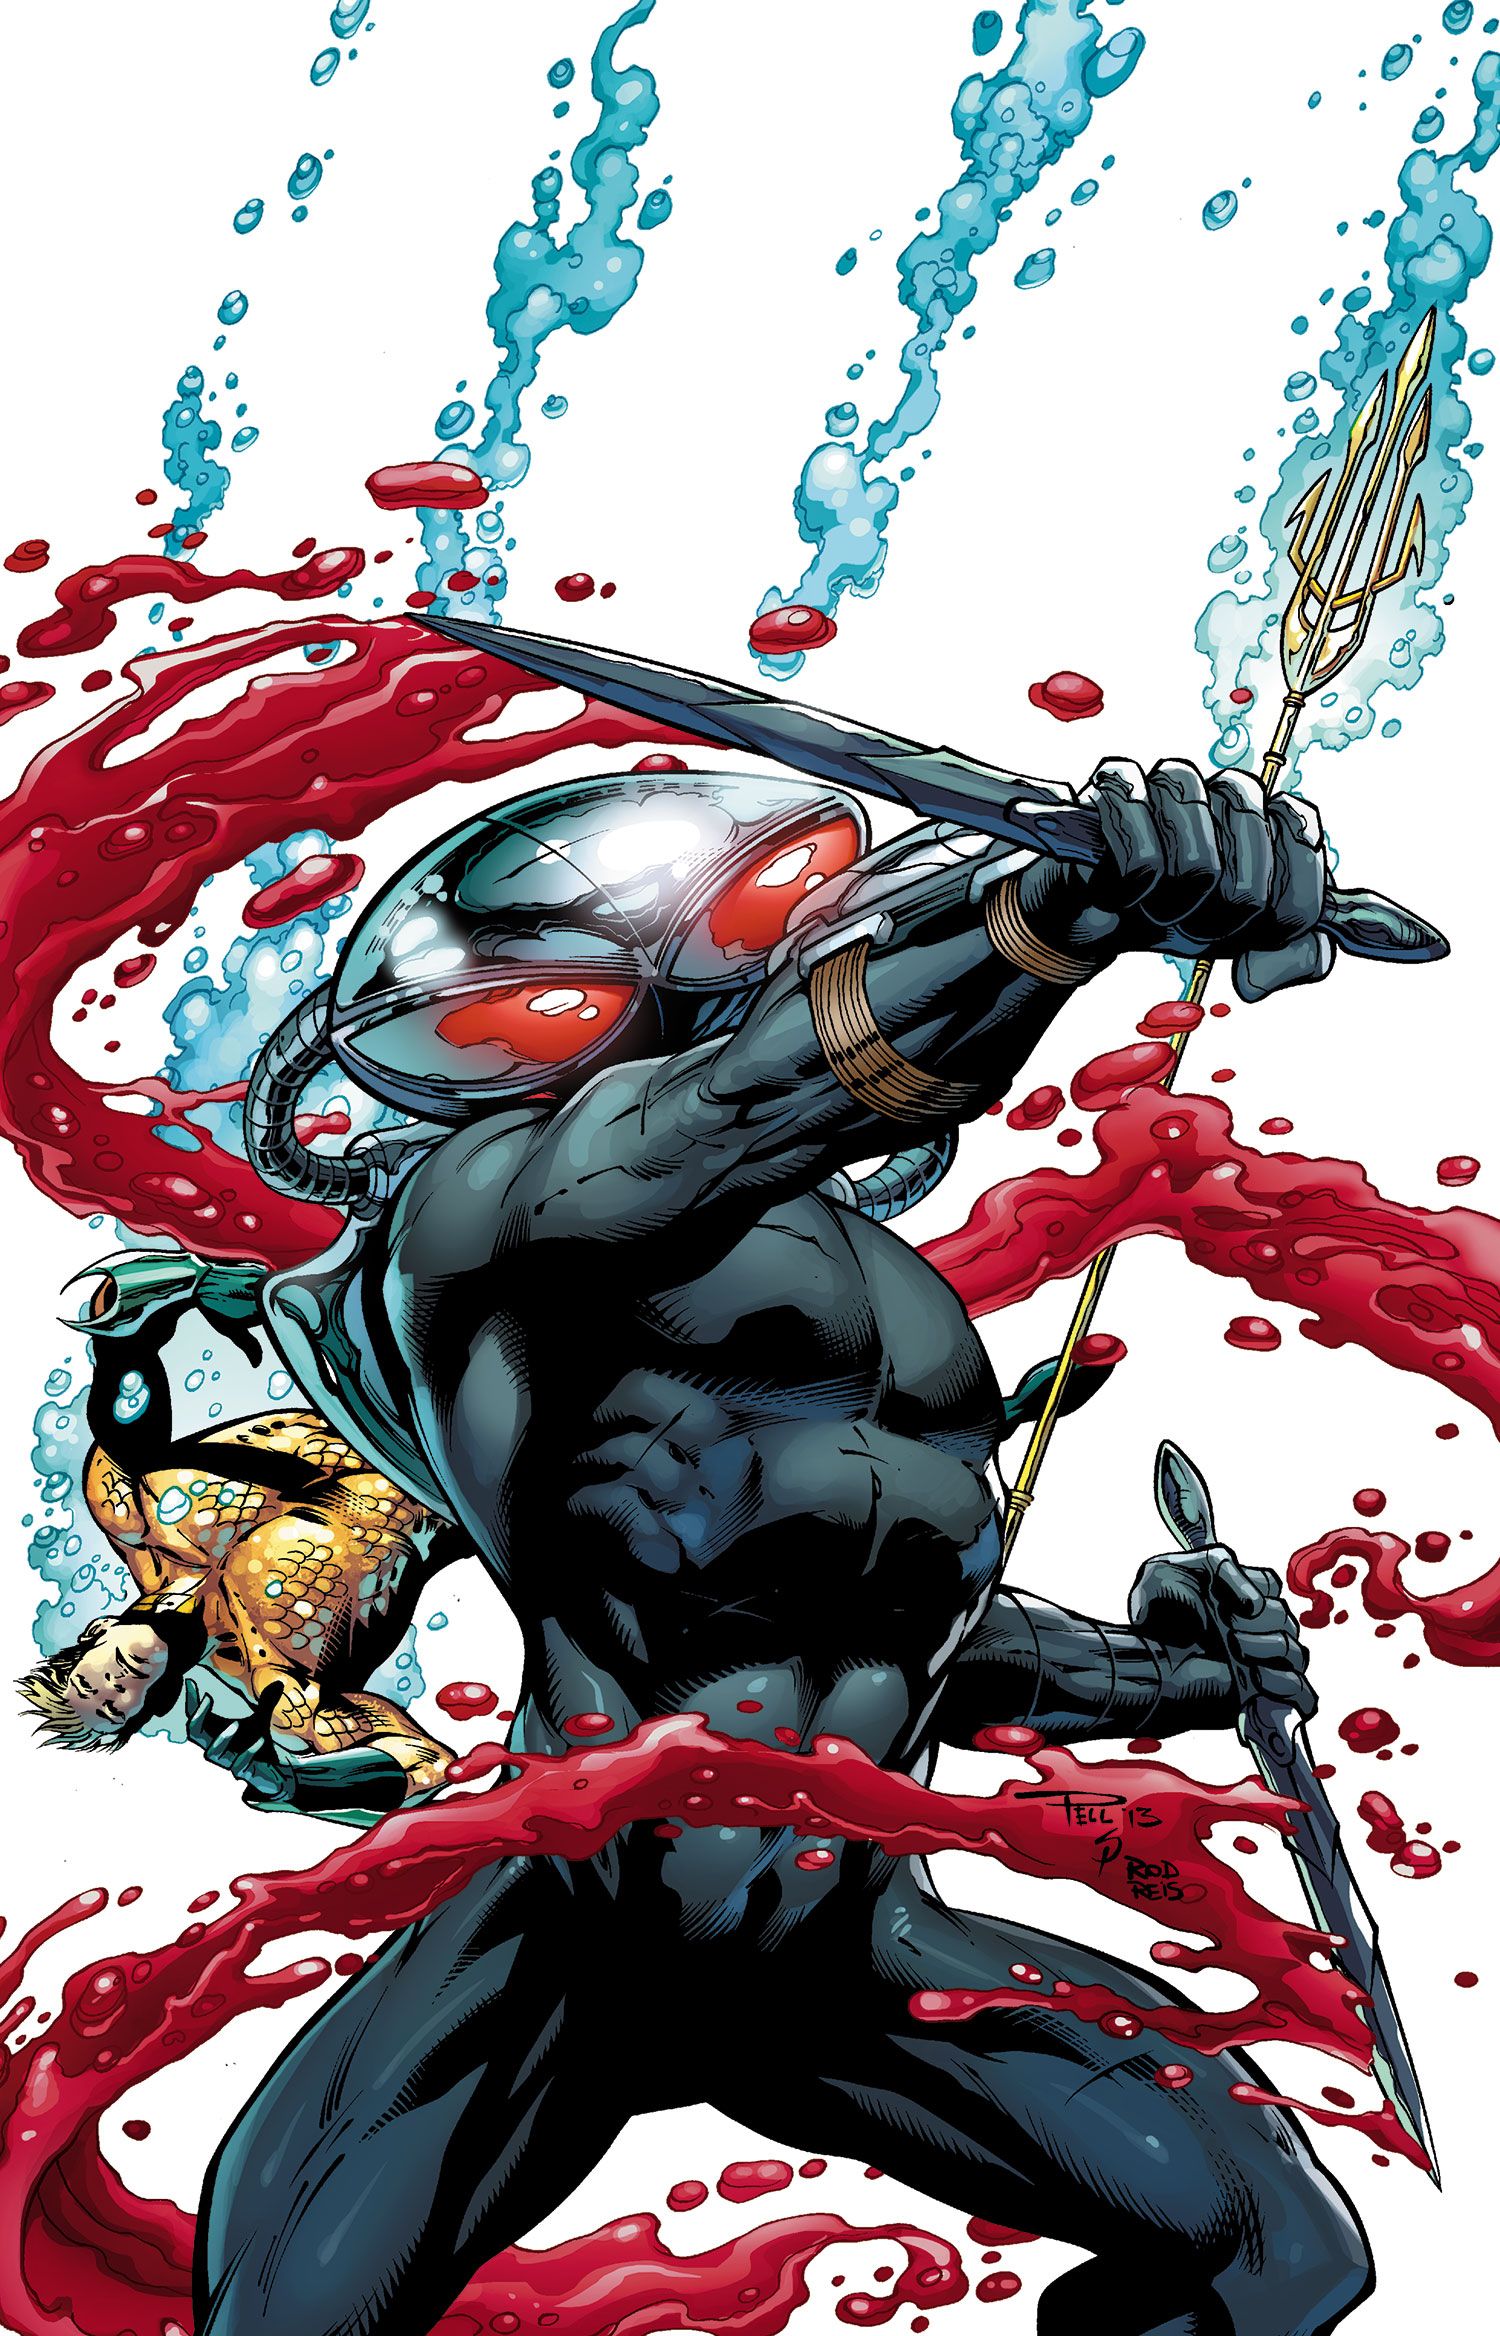 Black Manta set to be villain in Aquaman film. Discussion